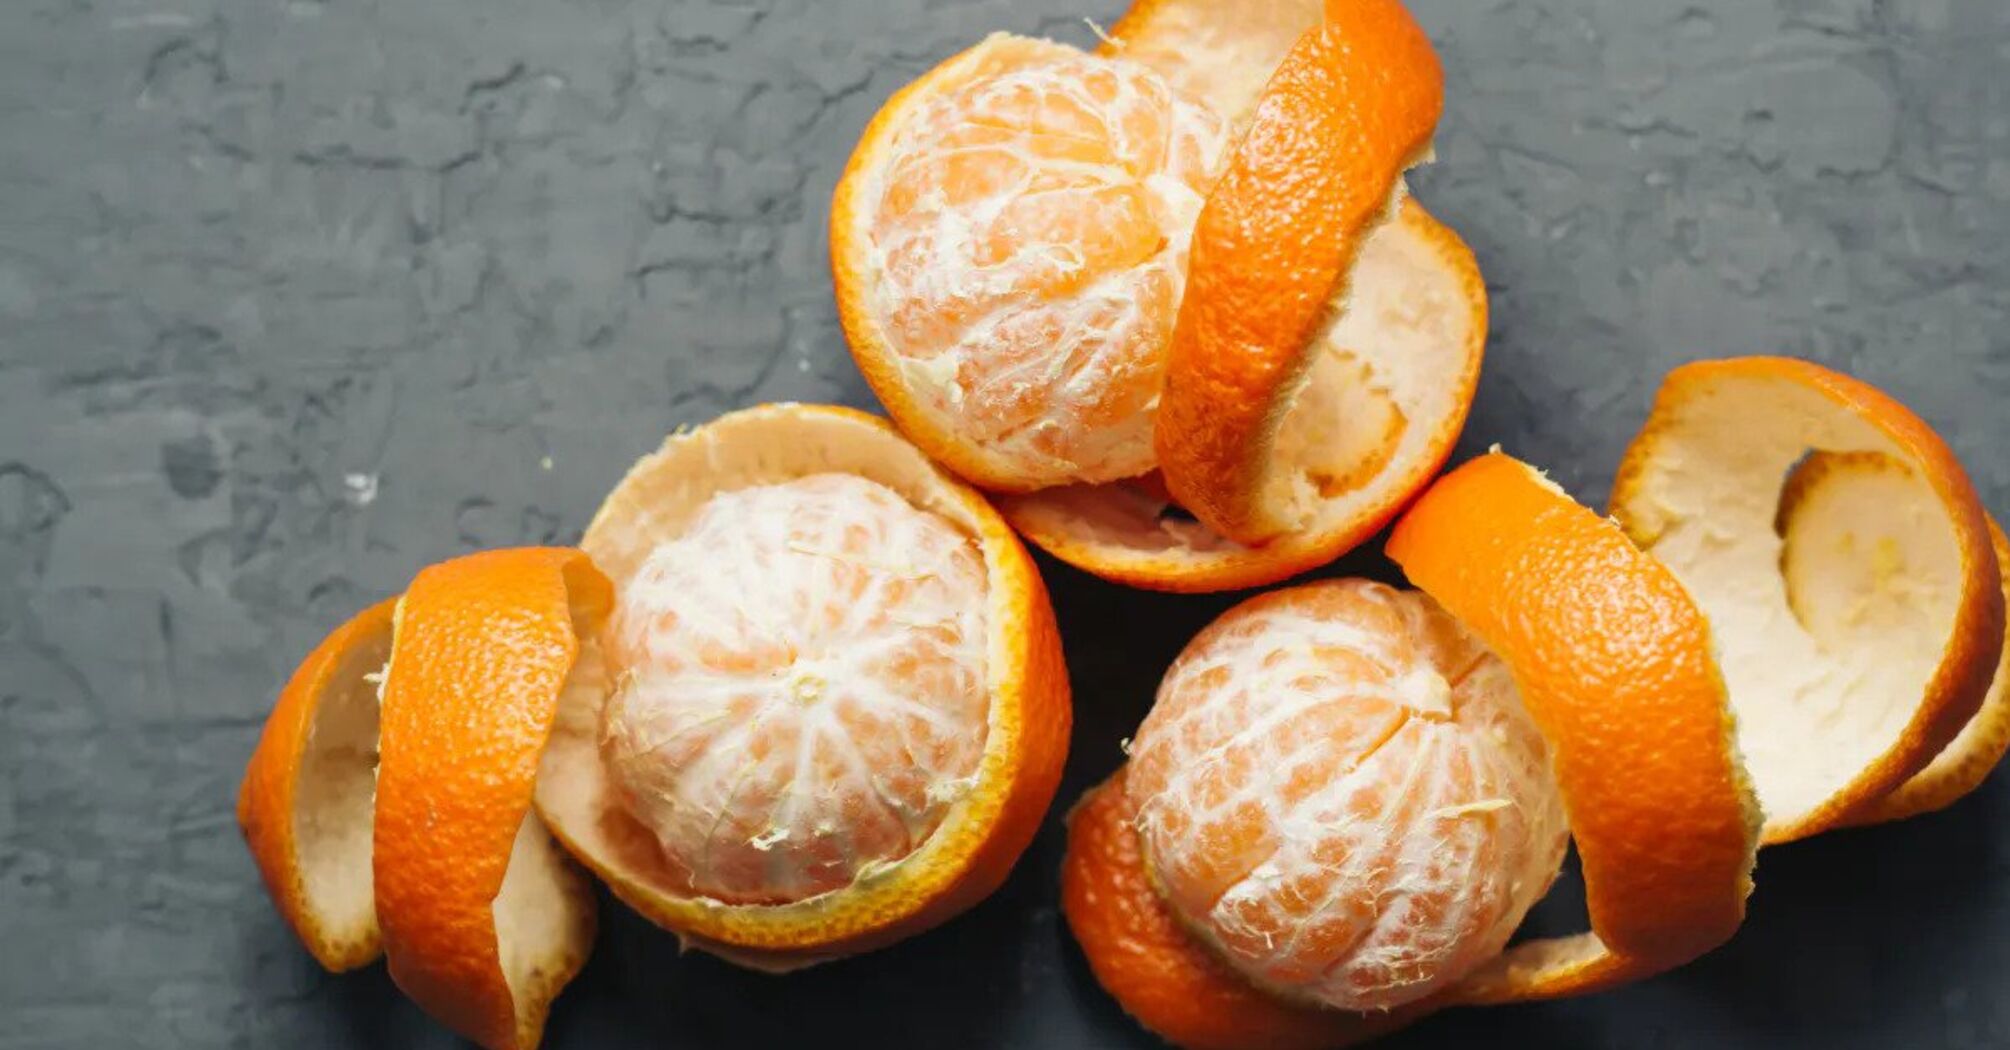 Why you shouldn't throw away mandarin peels